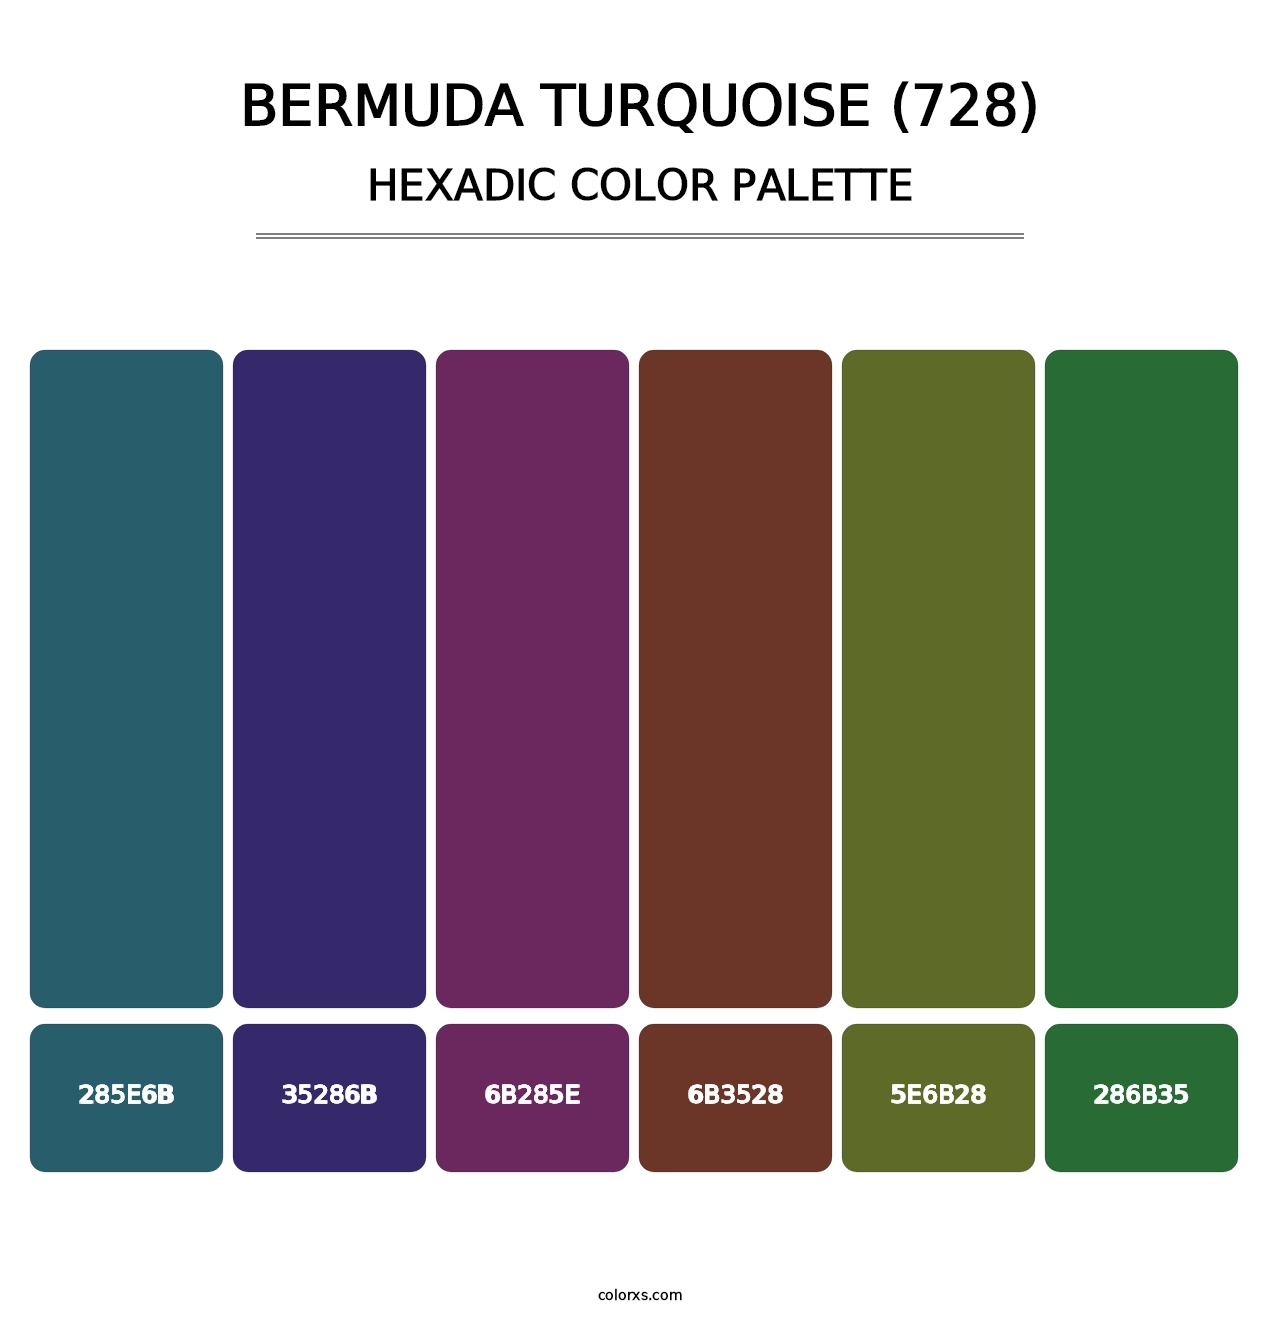 Bermuda Turquoise (728) - Hexadic Color Palette